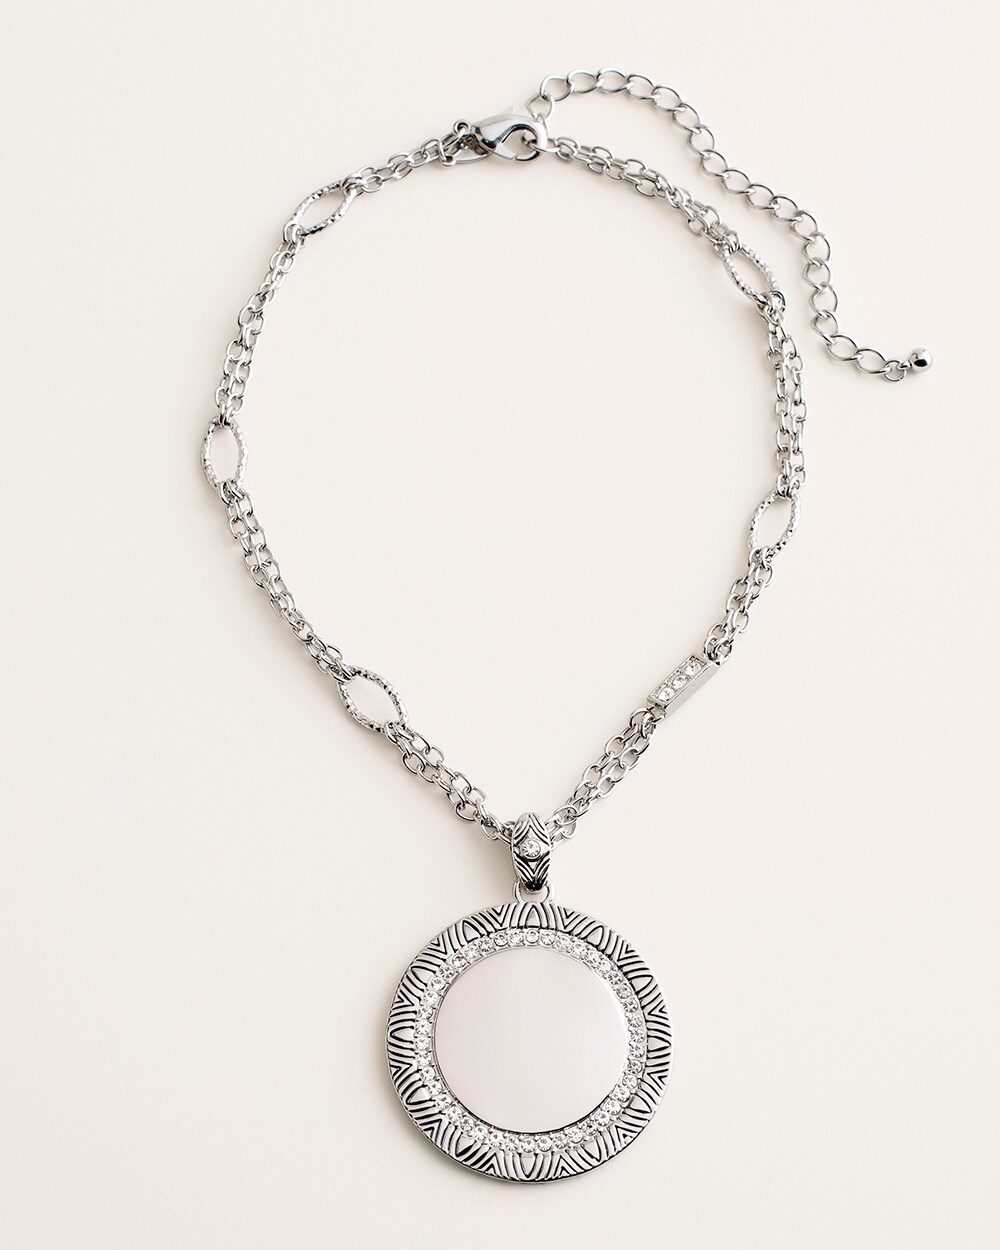 Reversible Silvertone Etched Pave Pendant Necklace